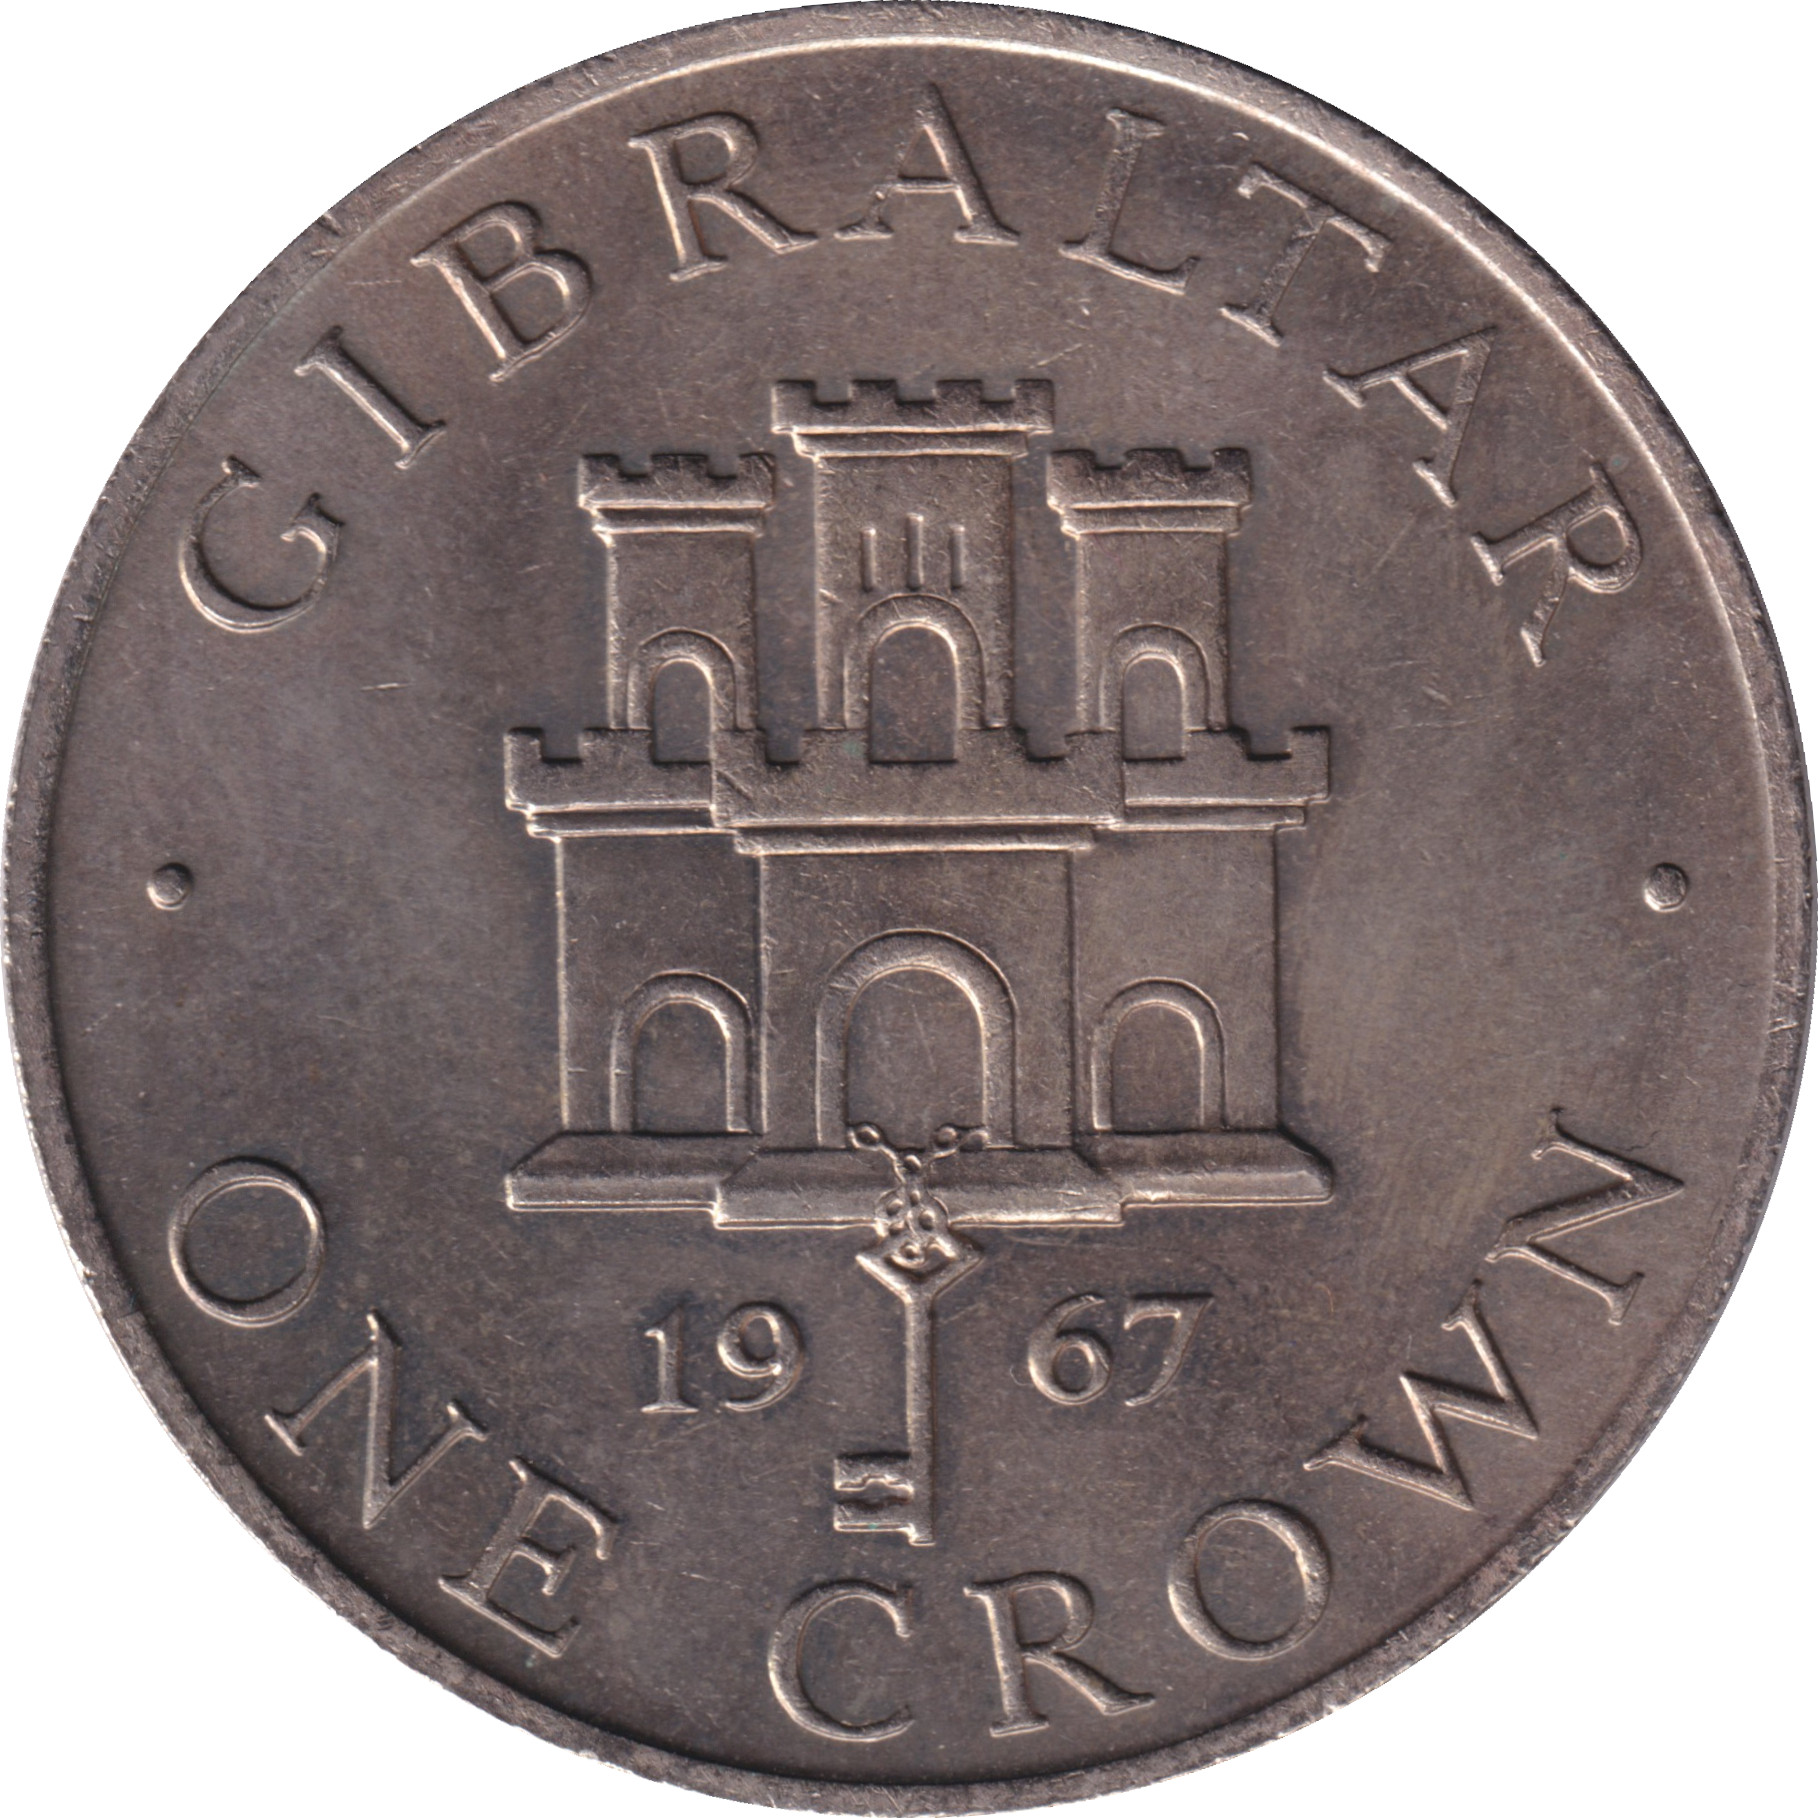 1 crown - Elizabeth II - Cupronickel